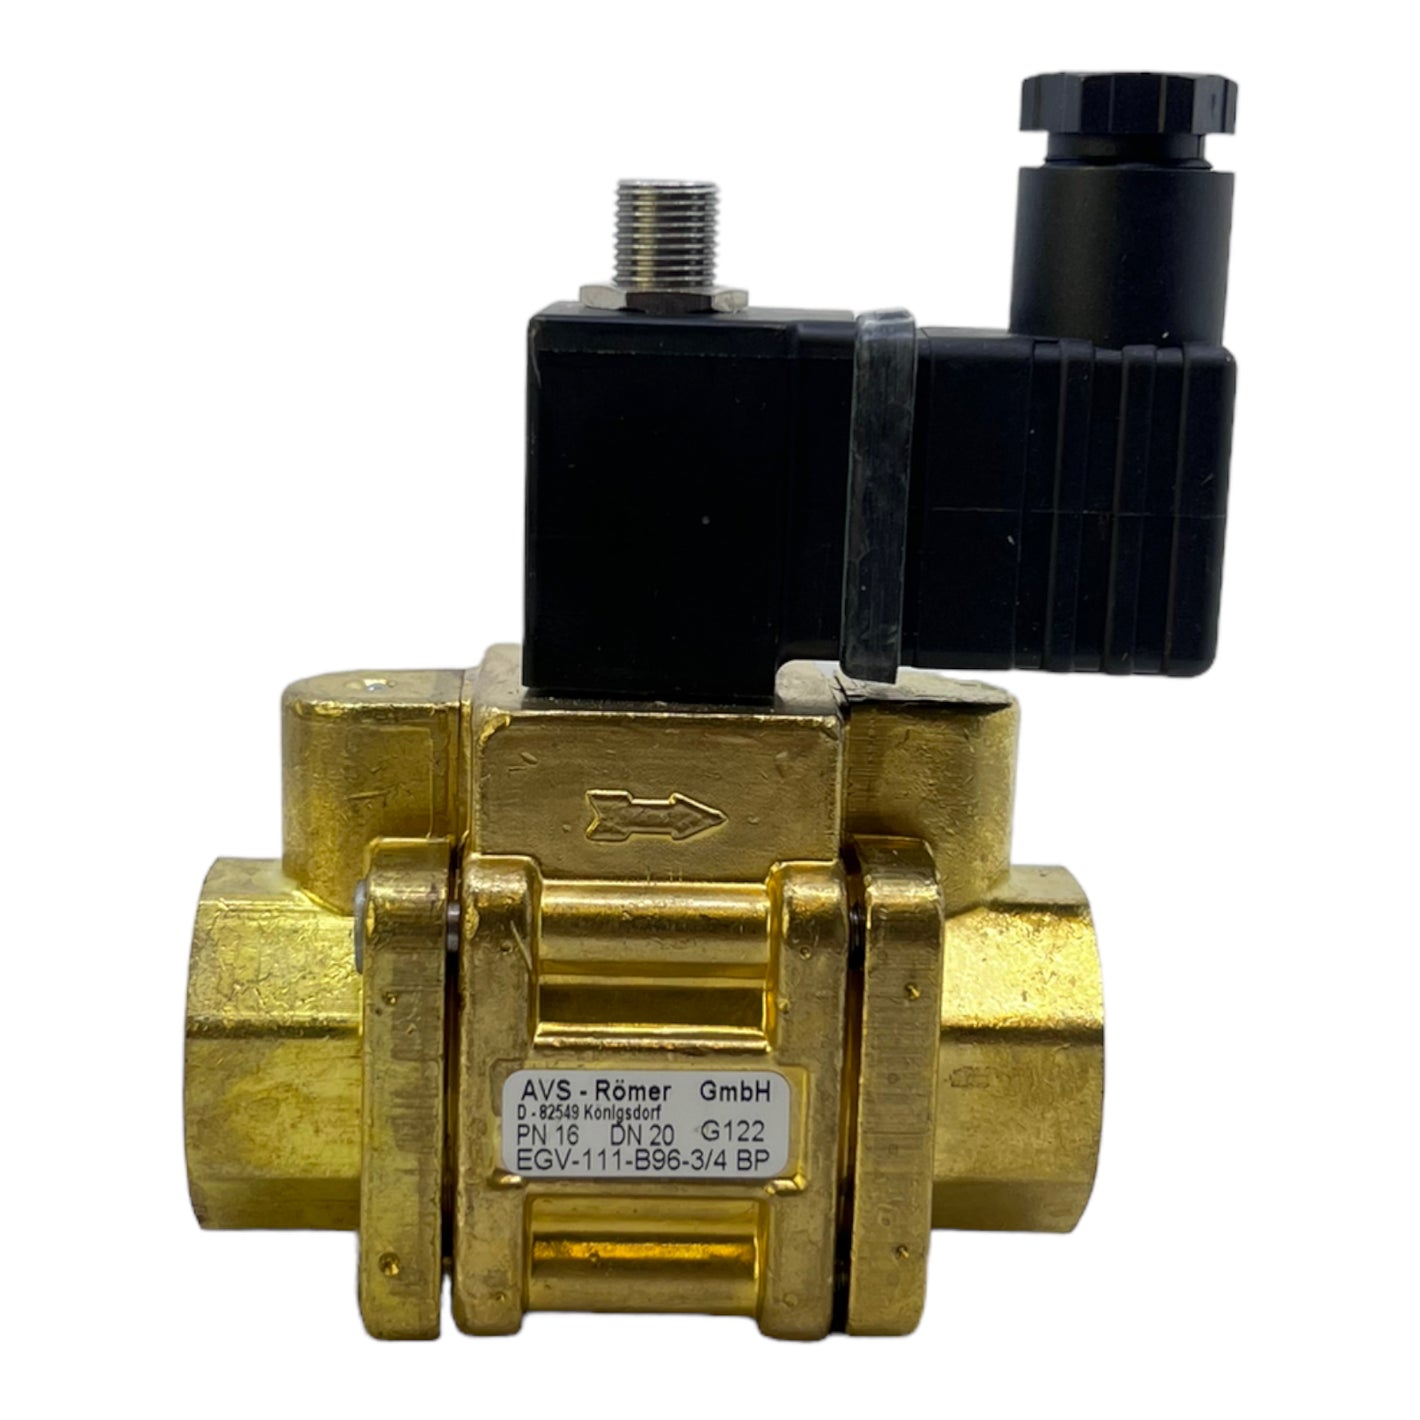 AVS Römer EGV-111-B96-3/4BP solenoid valve 24 V = 5 W 